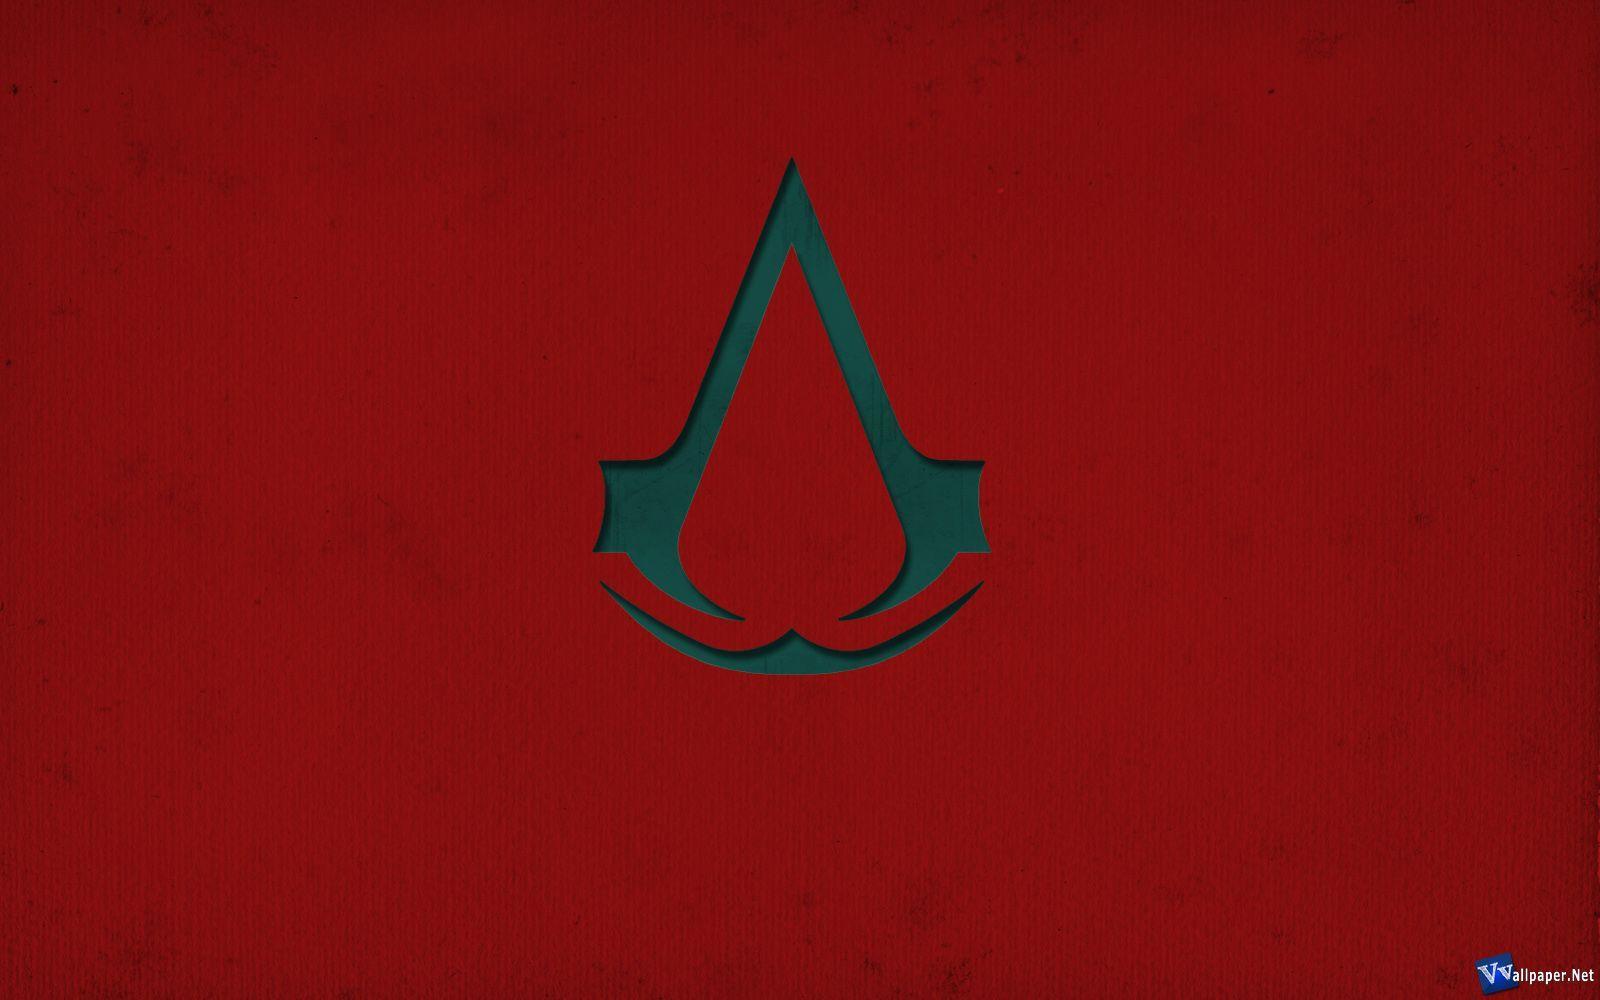 Assassin's Creed Symbol Desktop Wallpaper